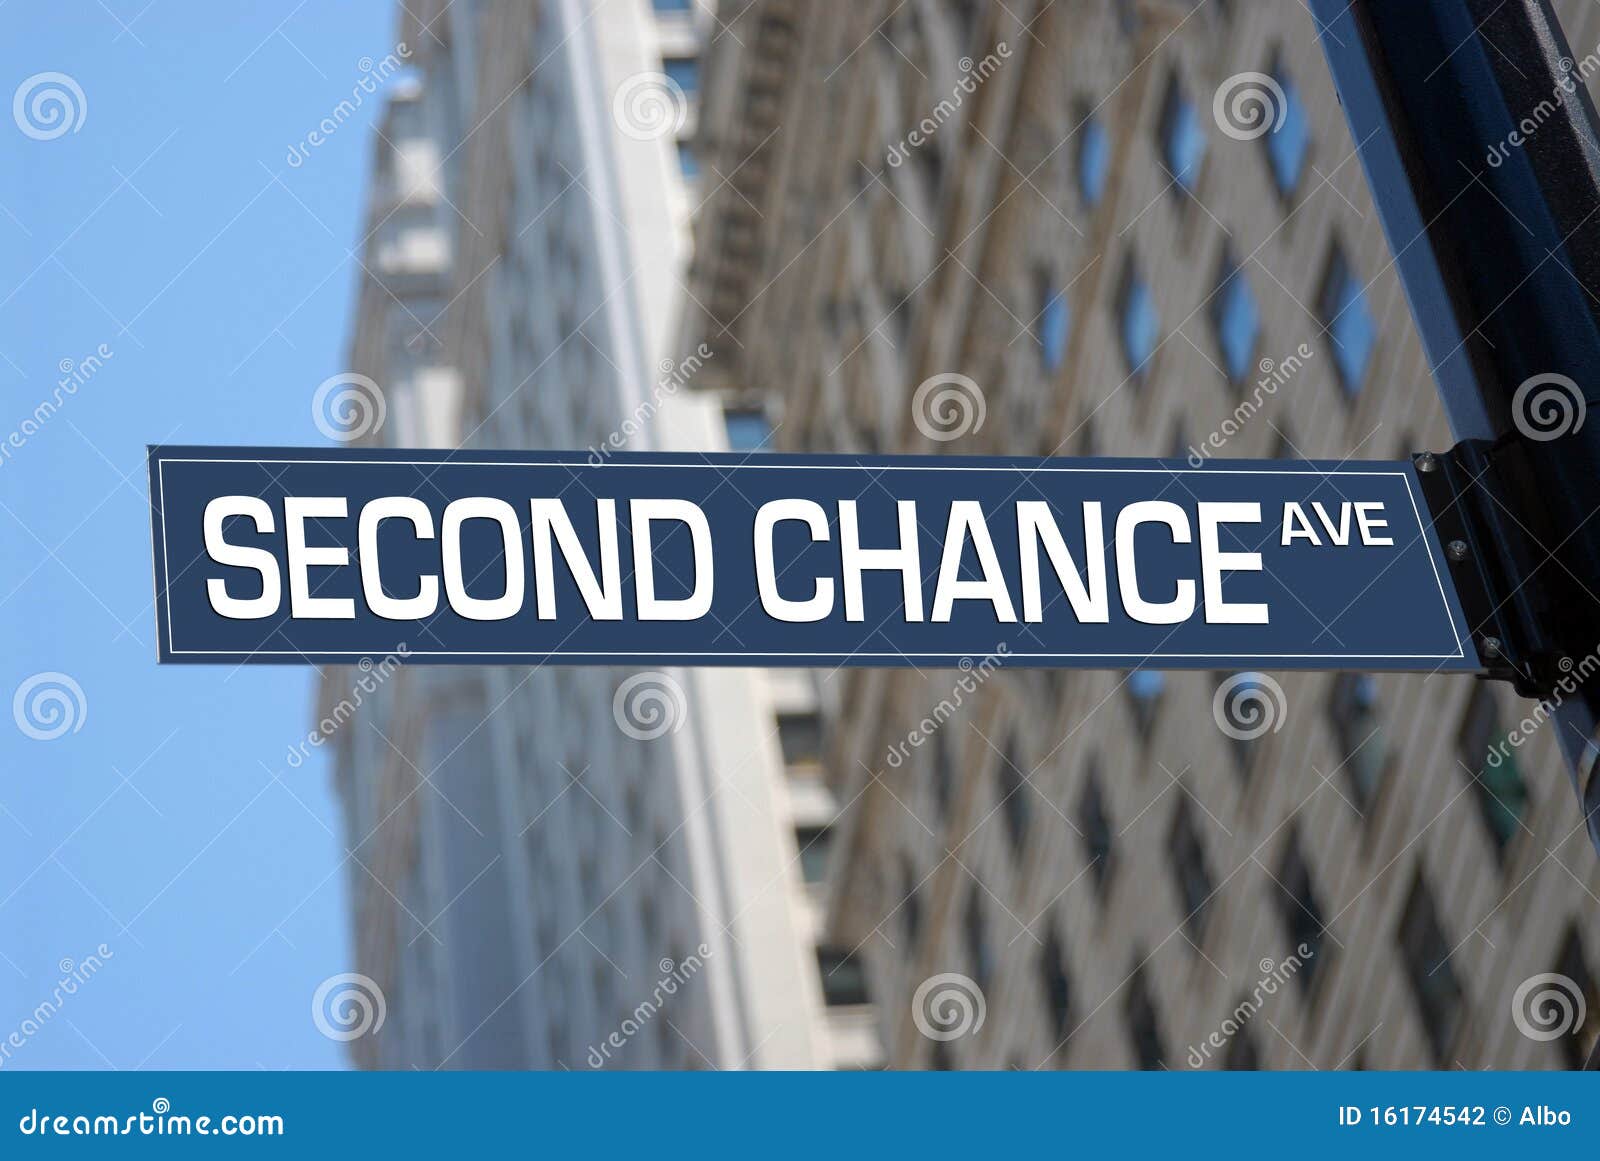 second chance avenue